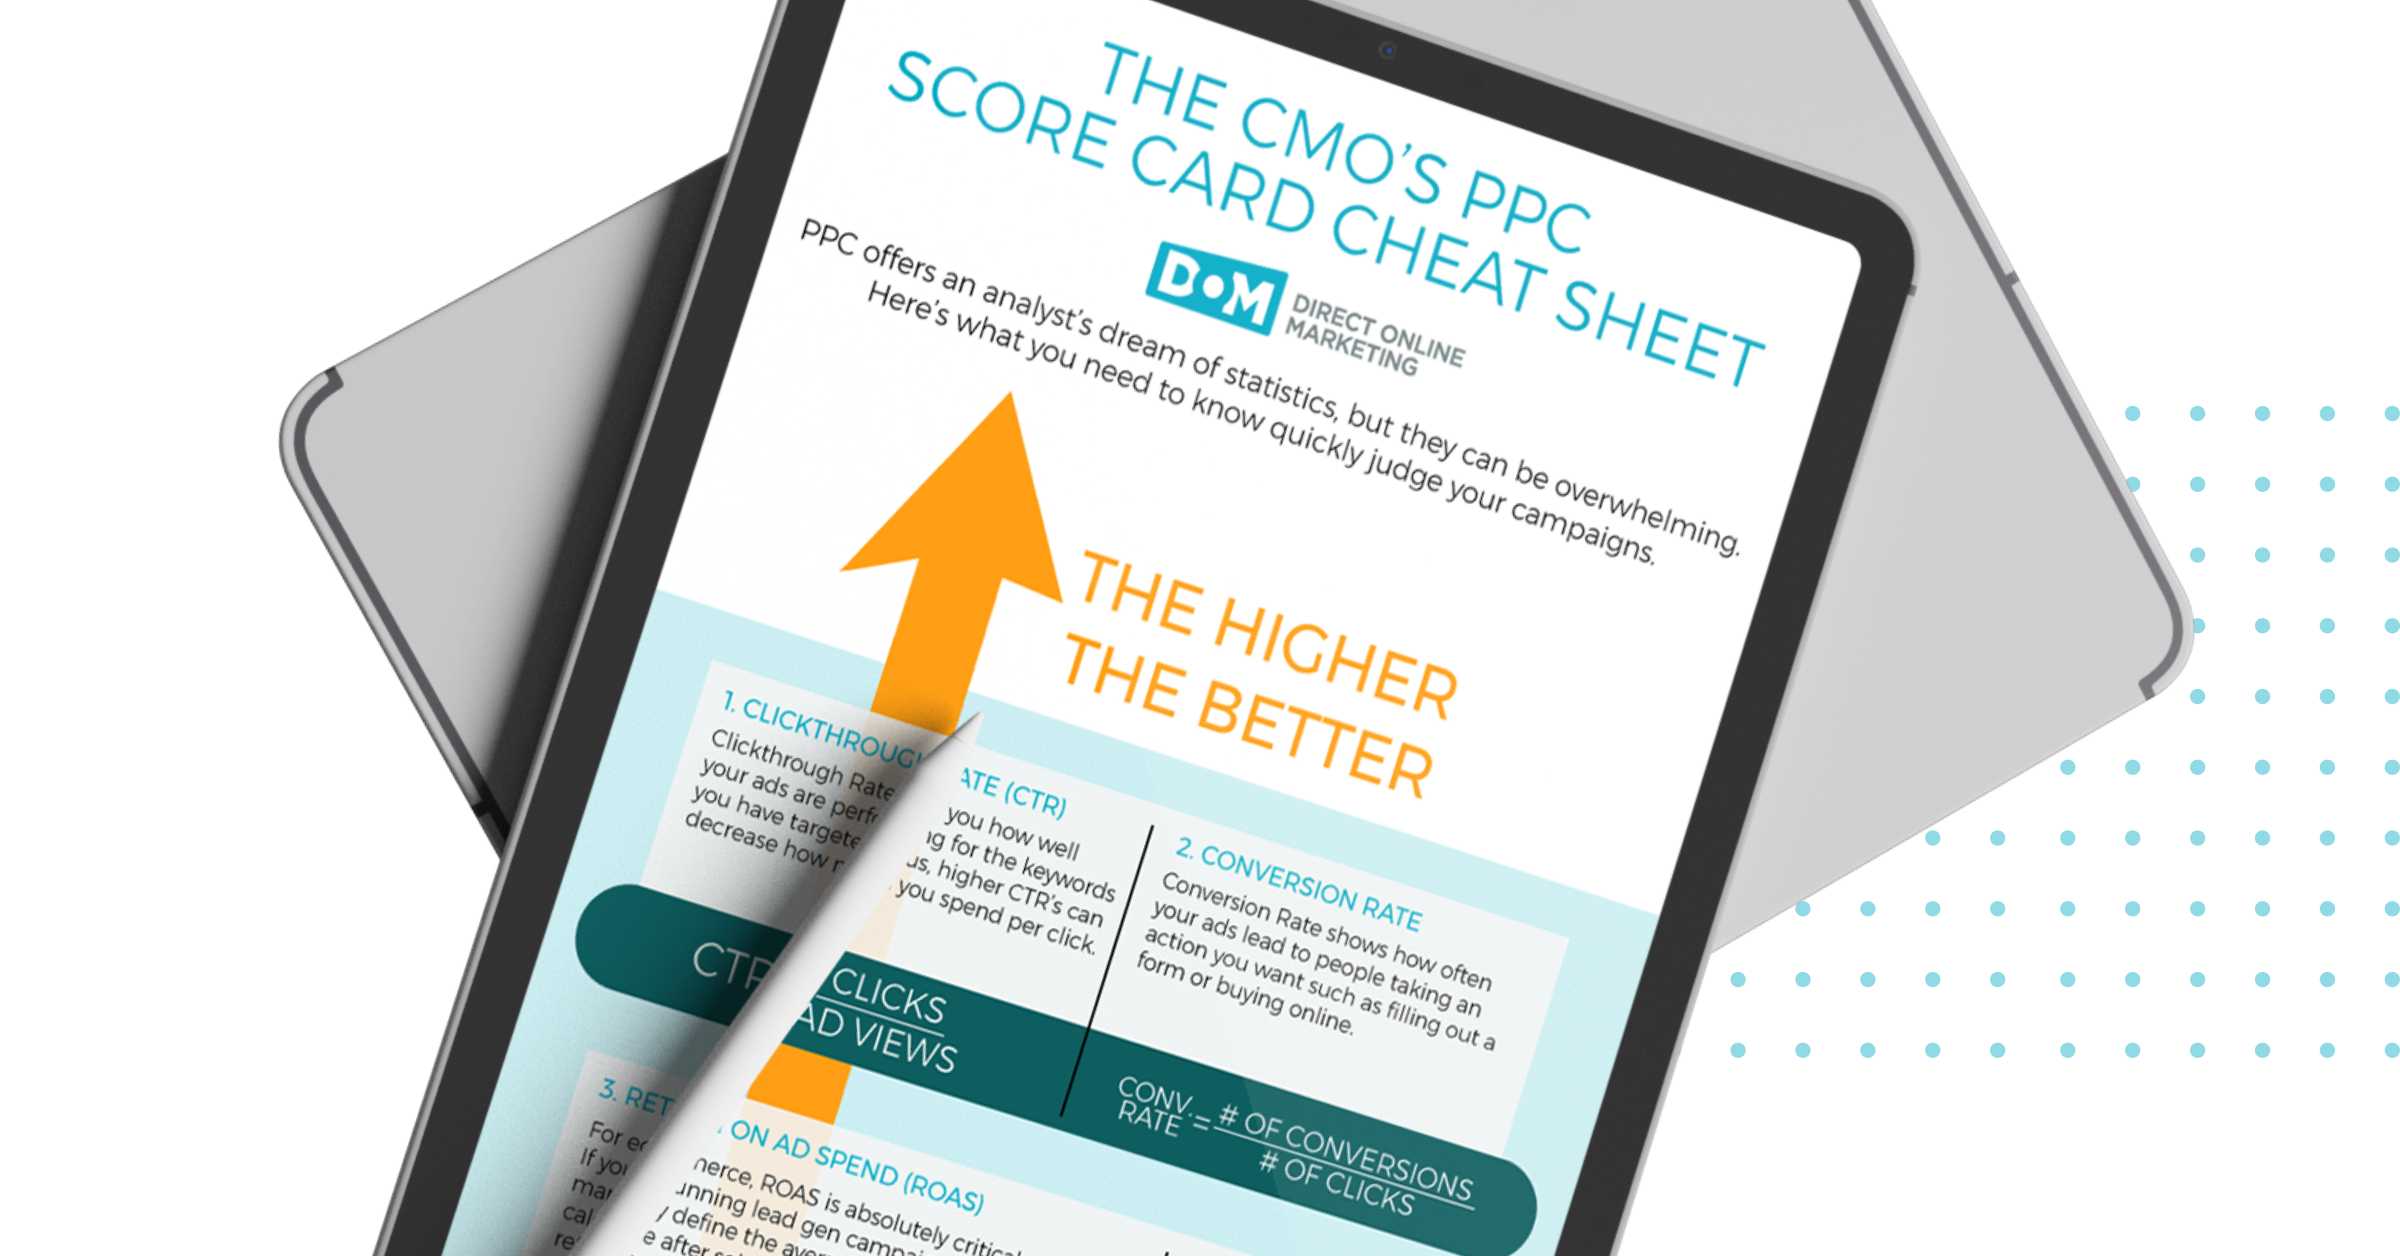 PPC Digital Advertising | CMO PPC Scorecard Cheat Sheet